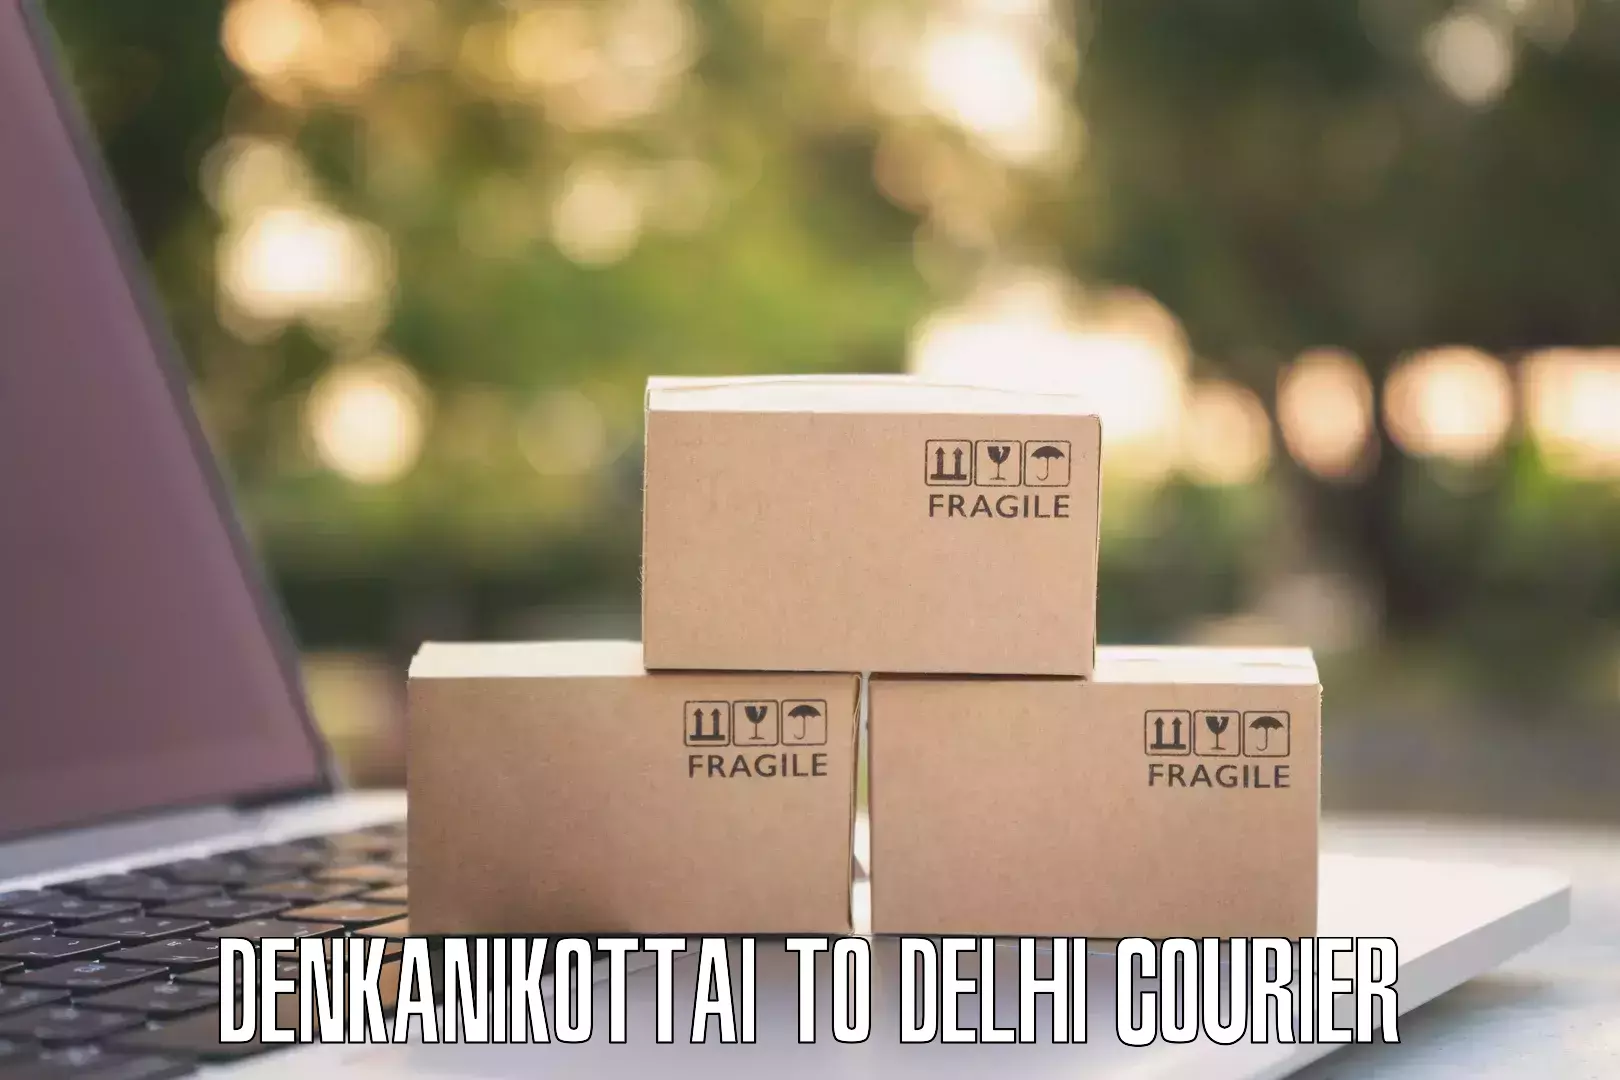 International shipping rates Denkanikottai to Ashok Vihar